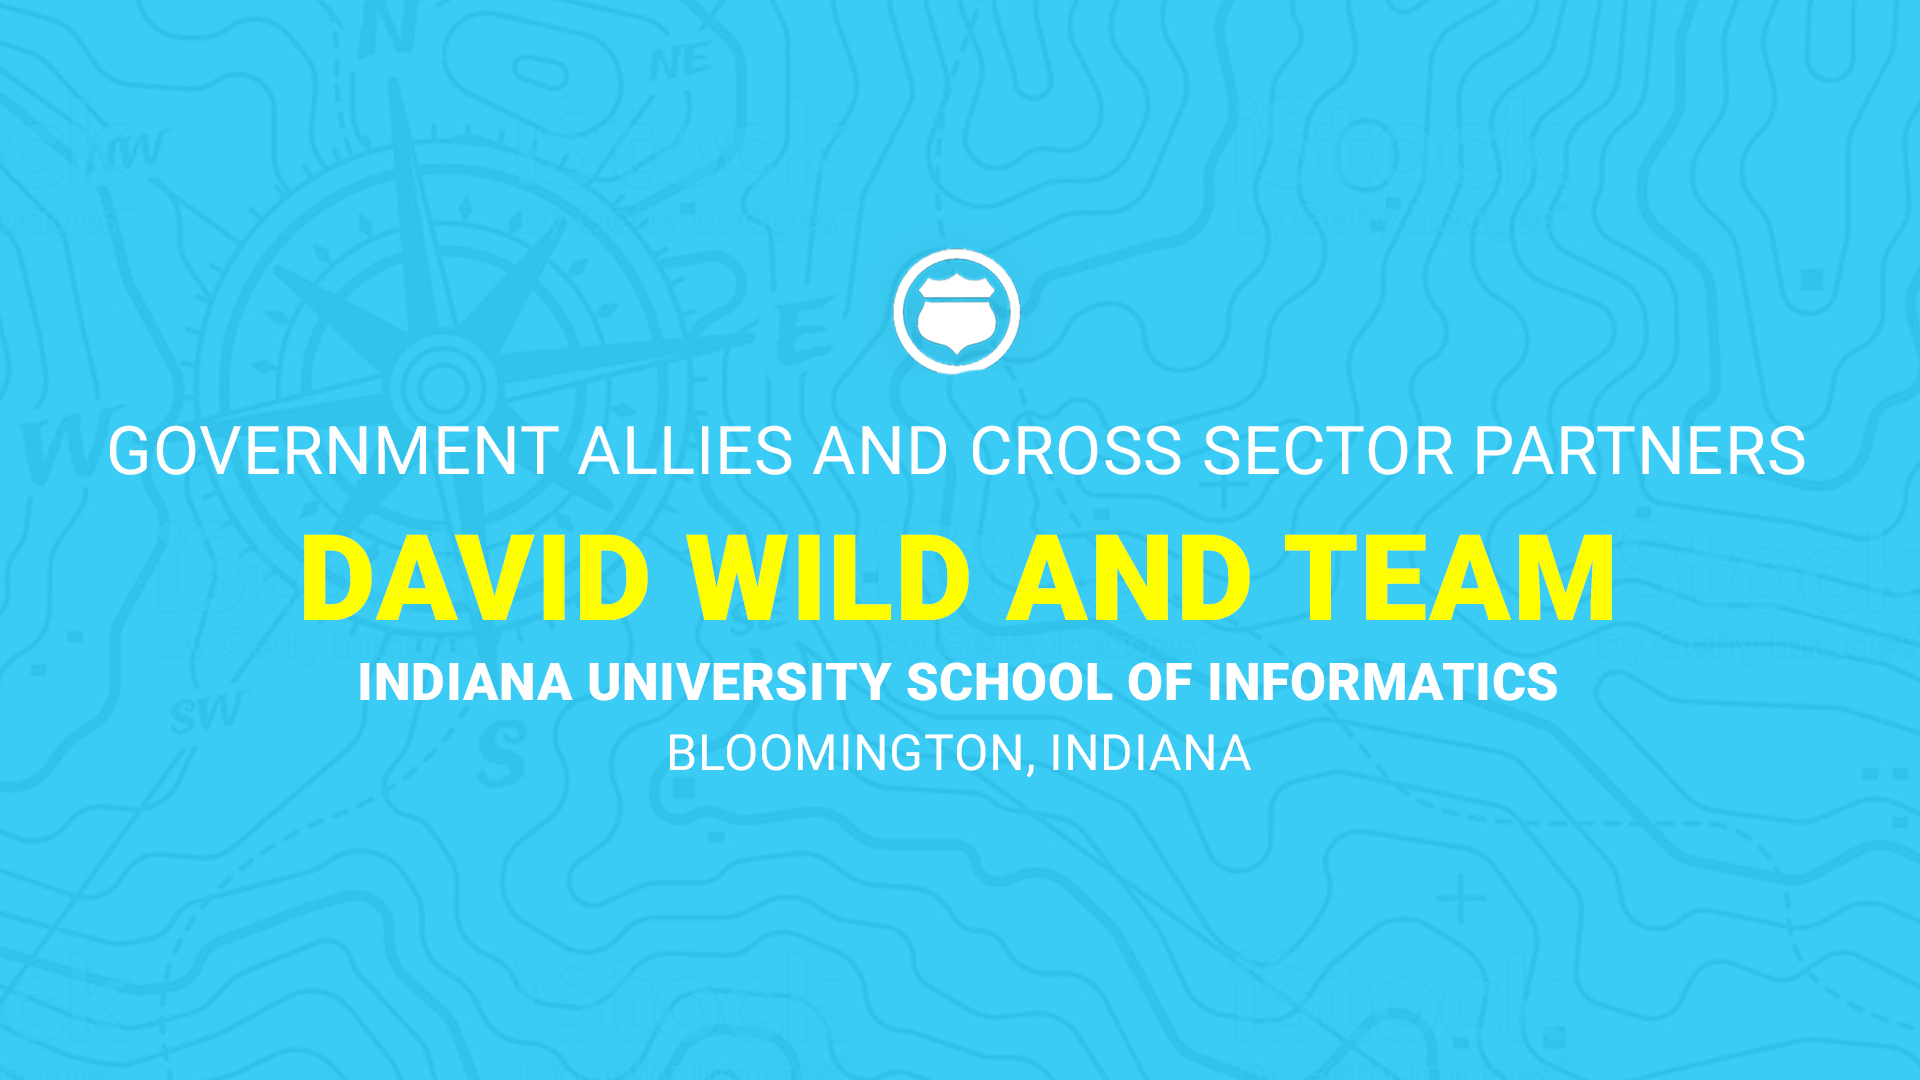 Professor David Wild and the Team from Indiana University School of Informatics